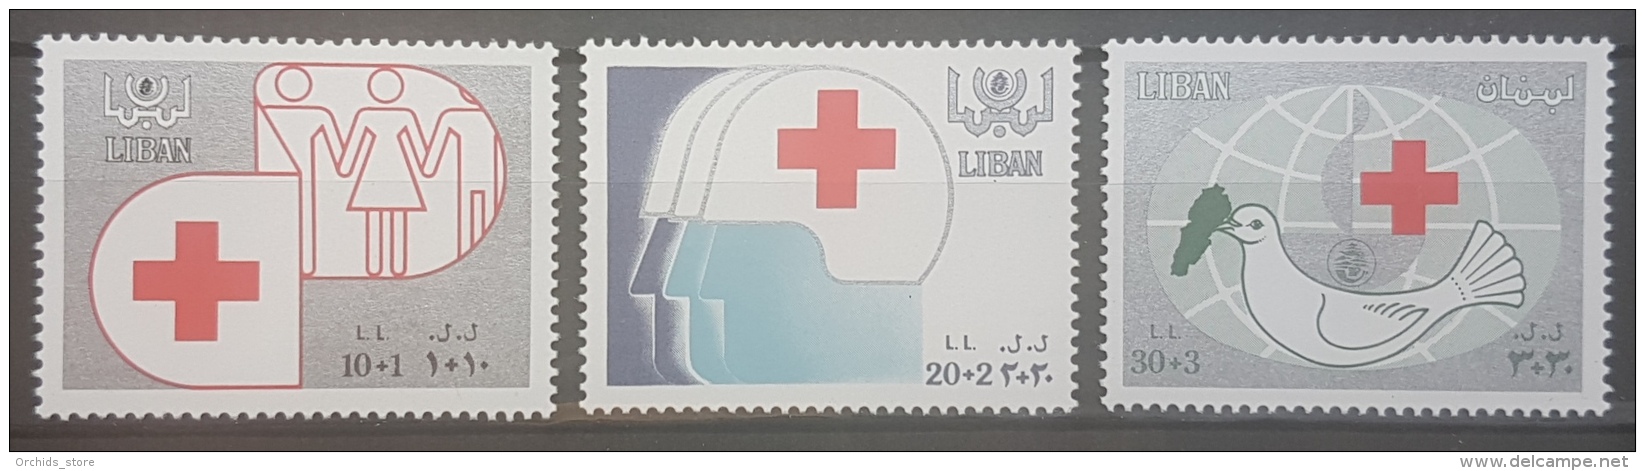 E1124Grp - Lebanon 1988 SG 1308-1310 Complete Set 3v. MNH - Red Cross - Lebanon